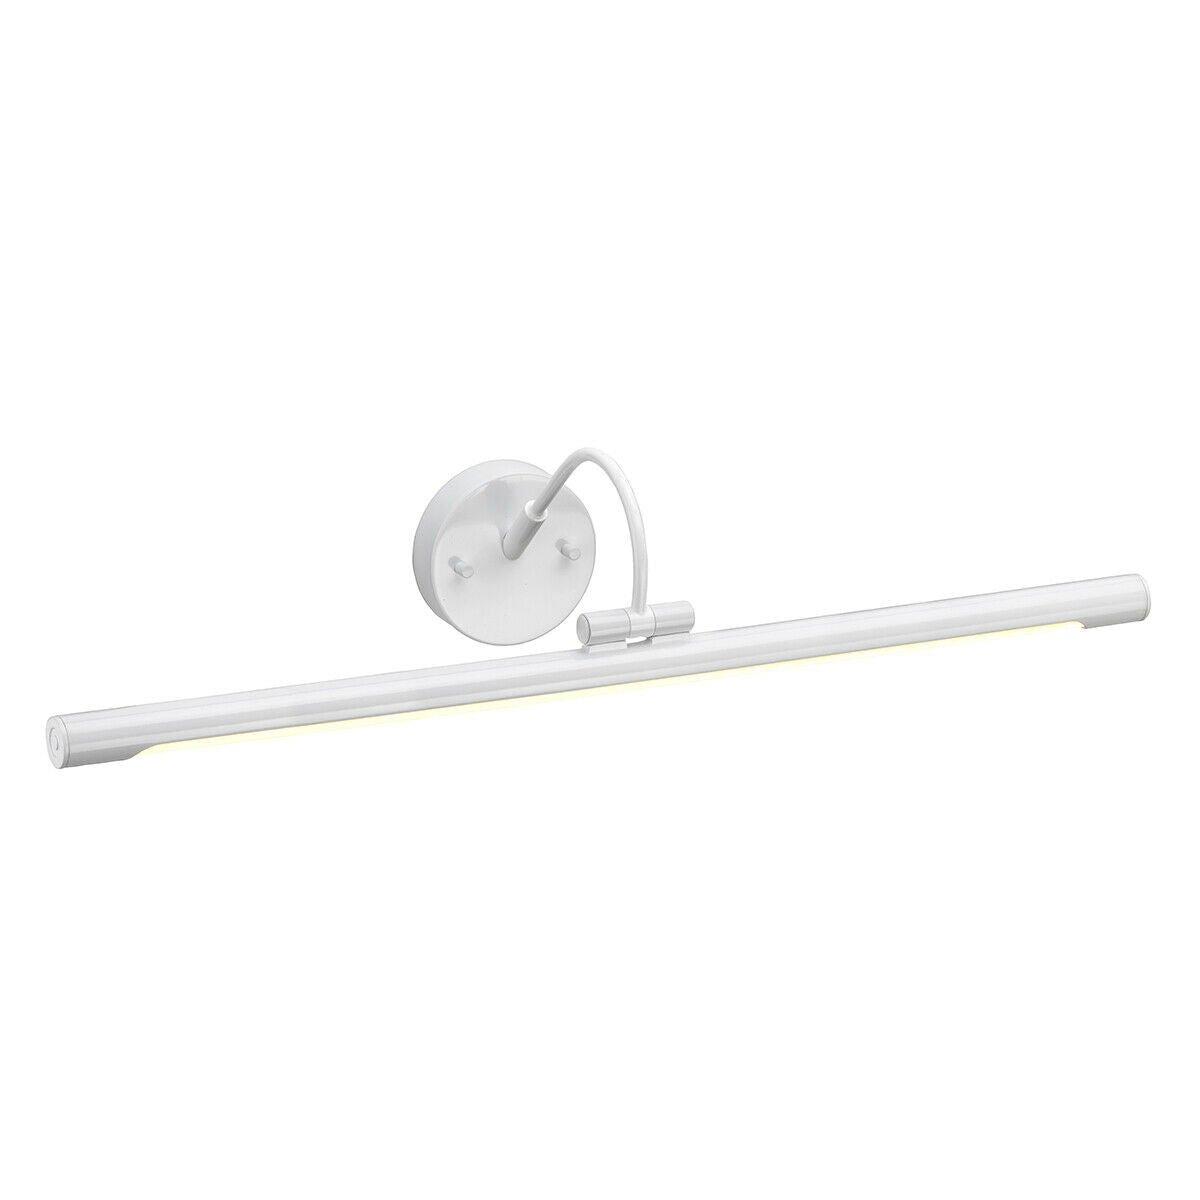 Single Bulb Adjustable LED Fitting Picture Light Slim White LED 7.9W Bulb